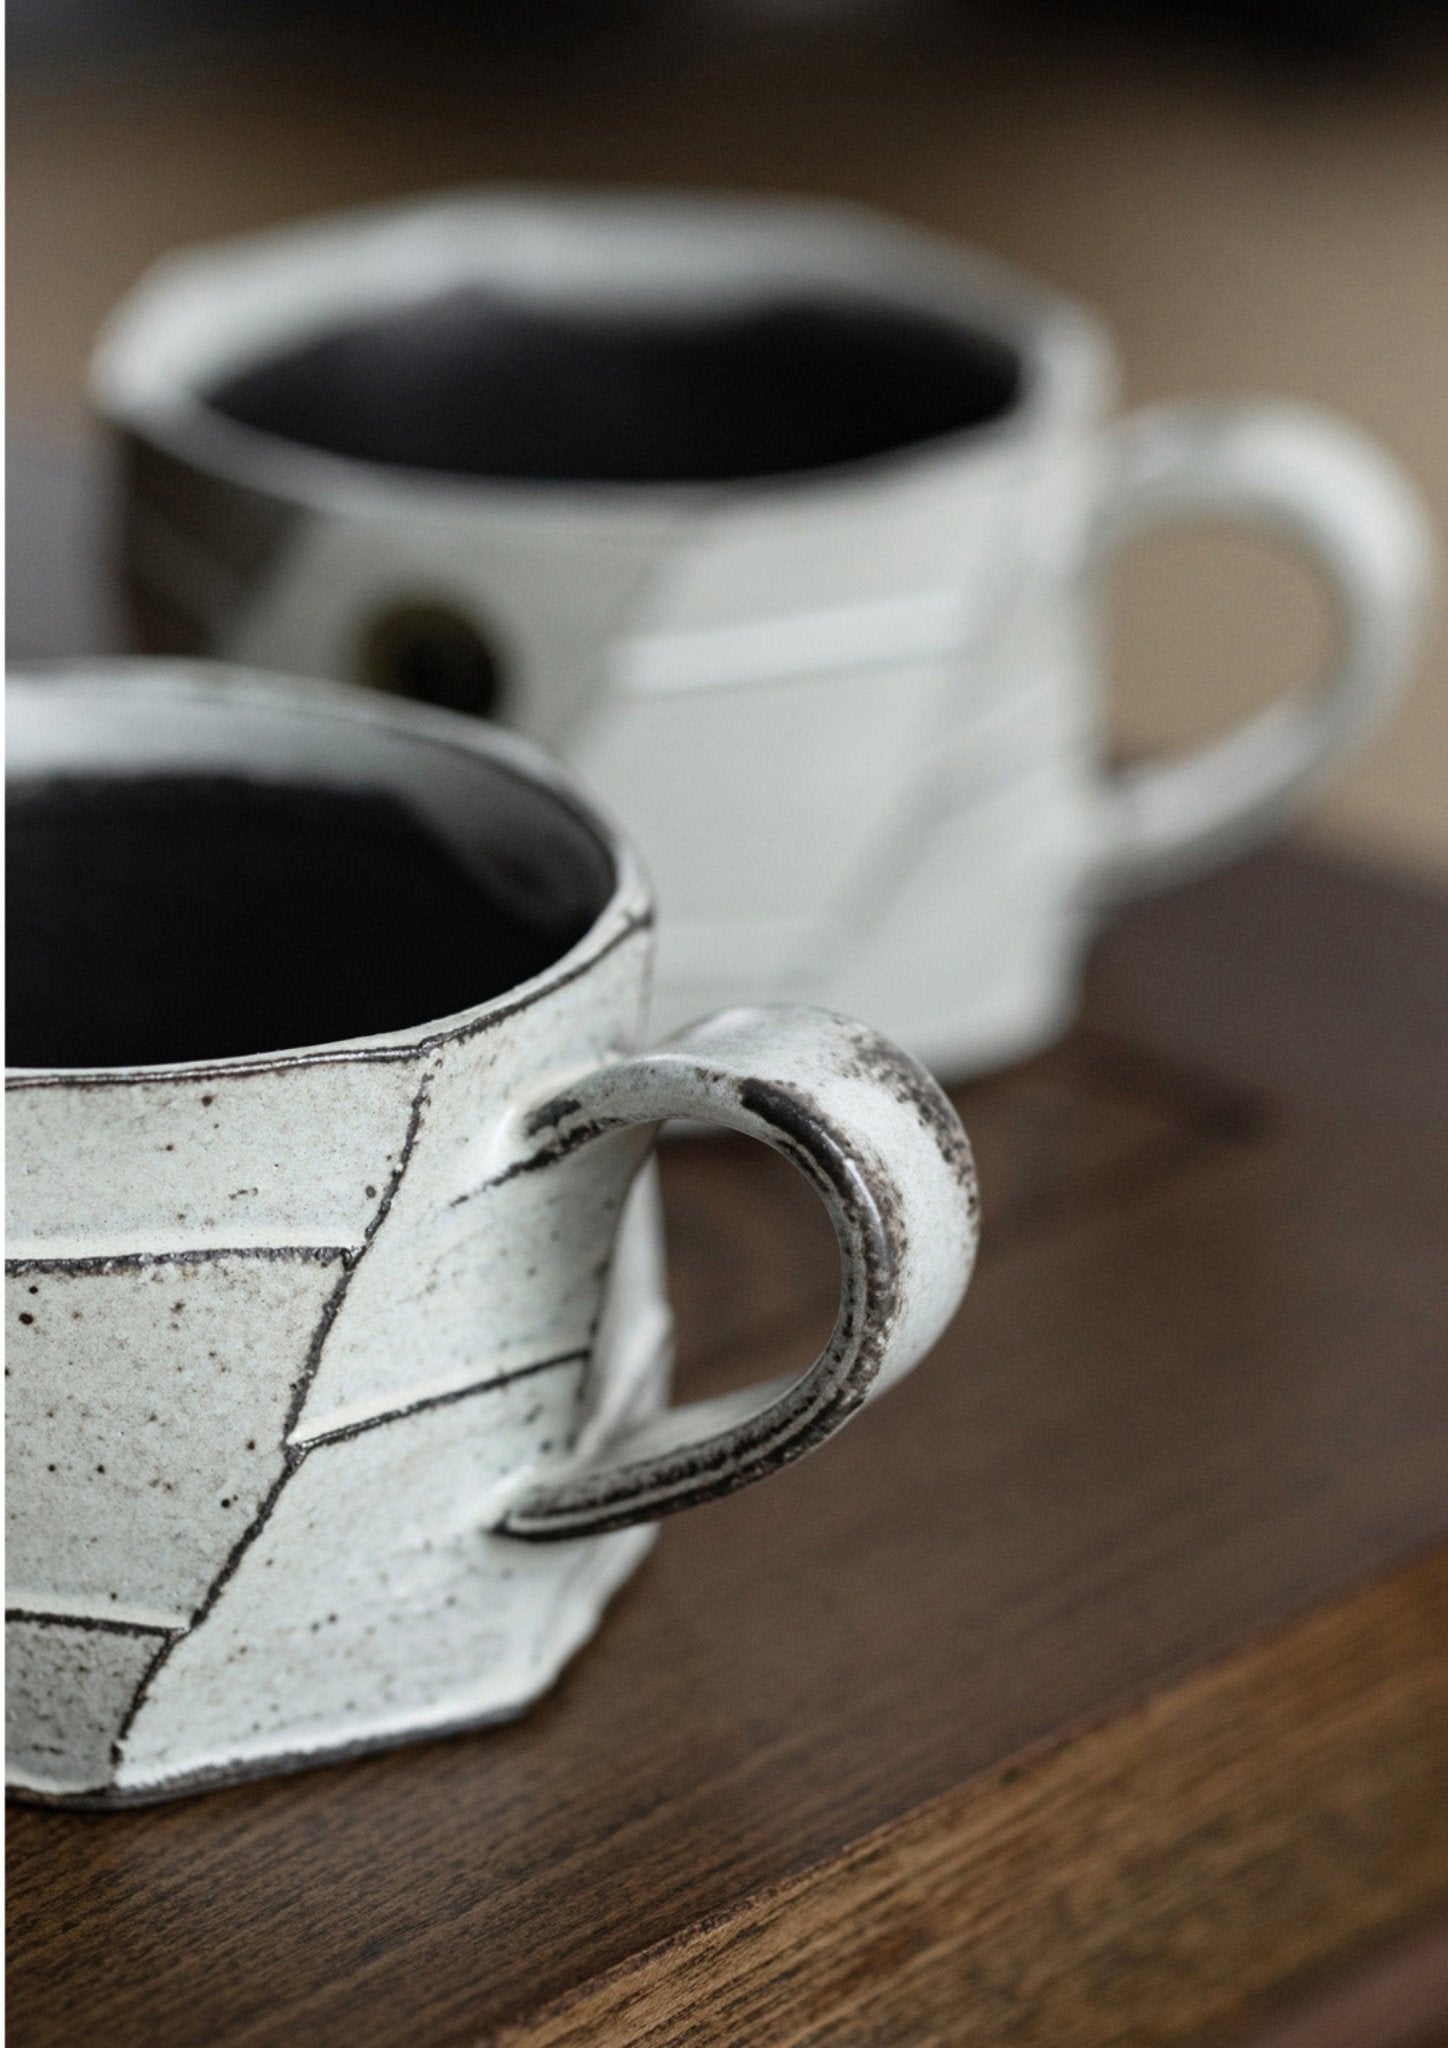 Rustic Hand-made Carved White Stoneware Mug imported from Japan | Ceramic Mug Handmade Pottery, Rustic, Glazed, Hand-Thrown Mug - -